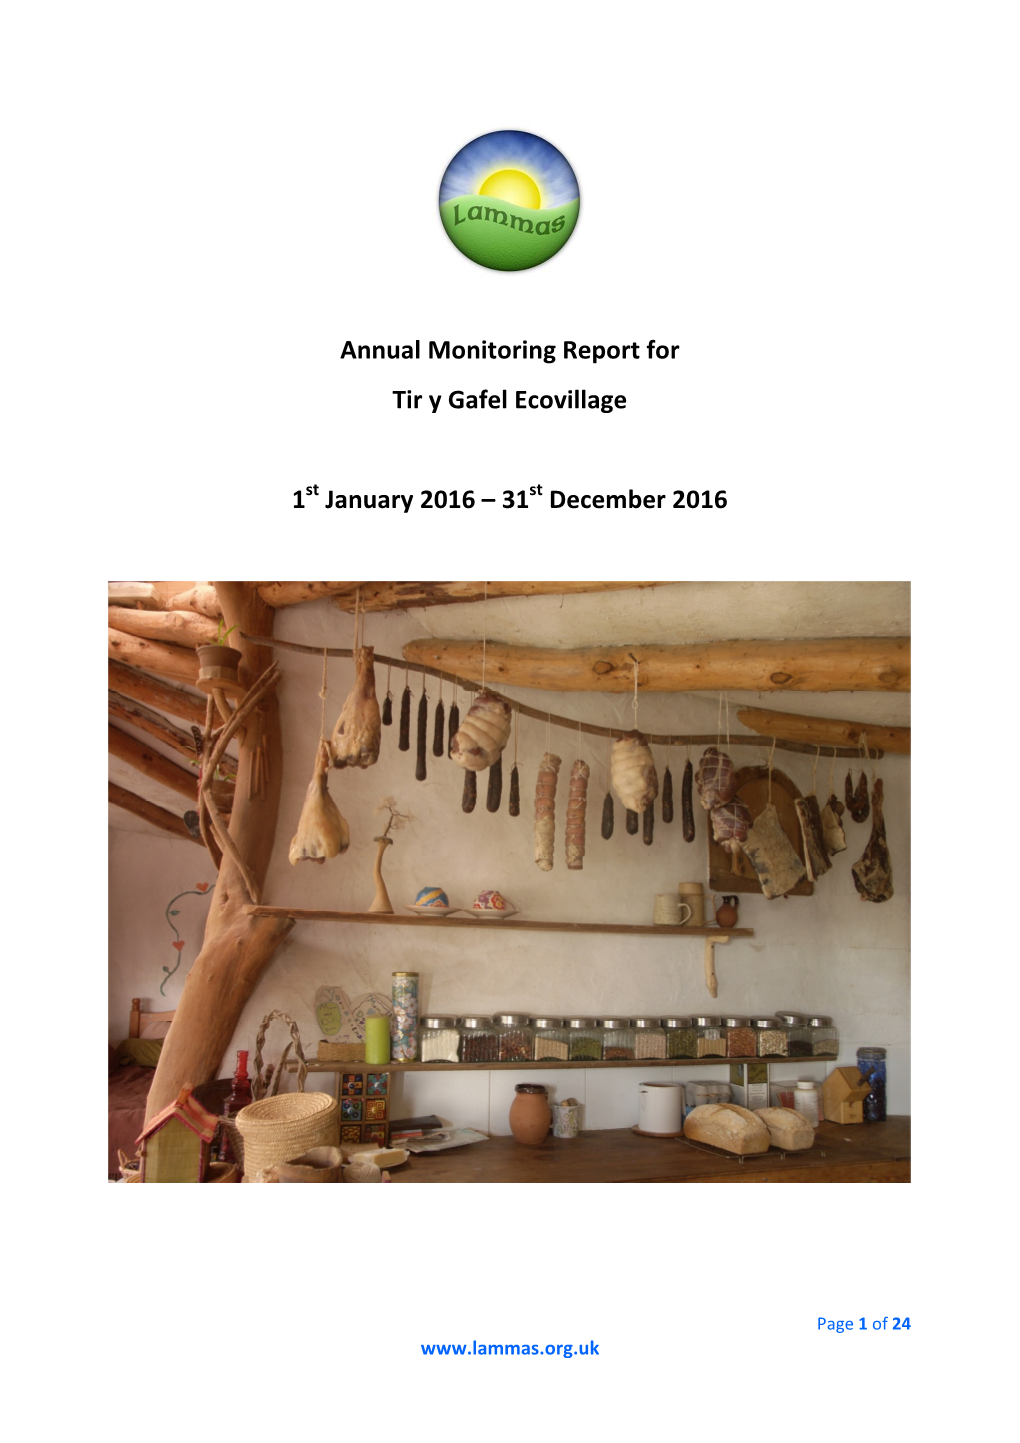 Annual Monitoring Report for Tir Y Gafel Ecovillage